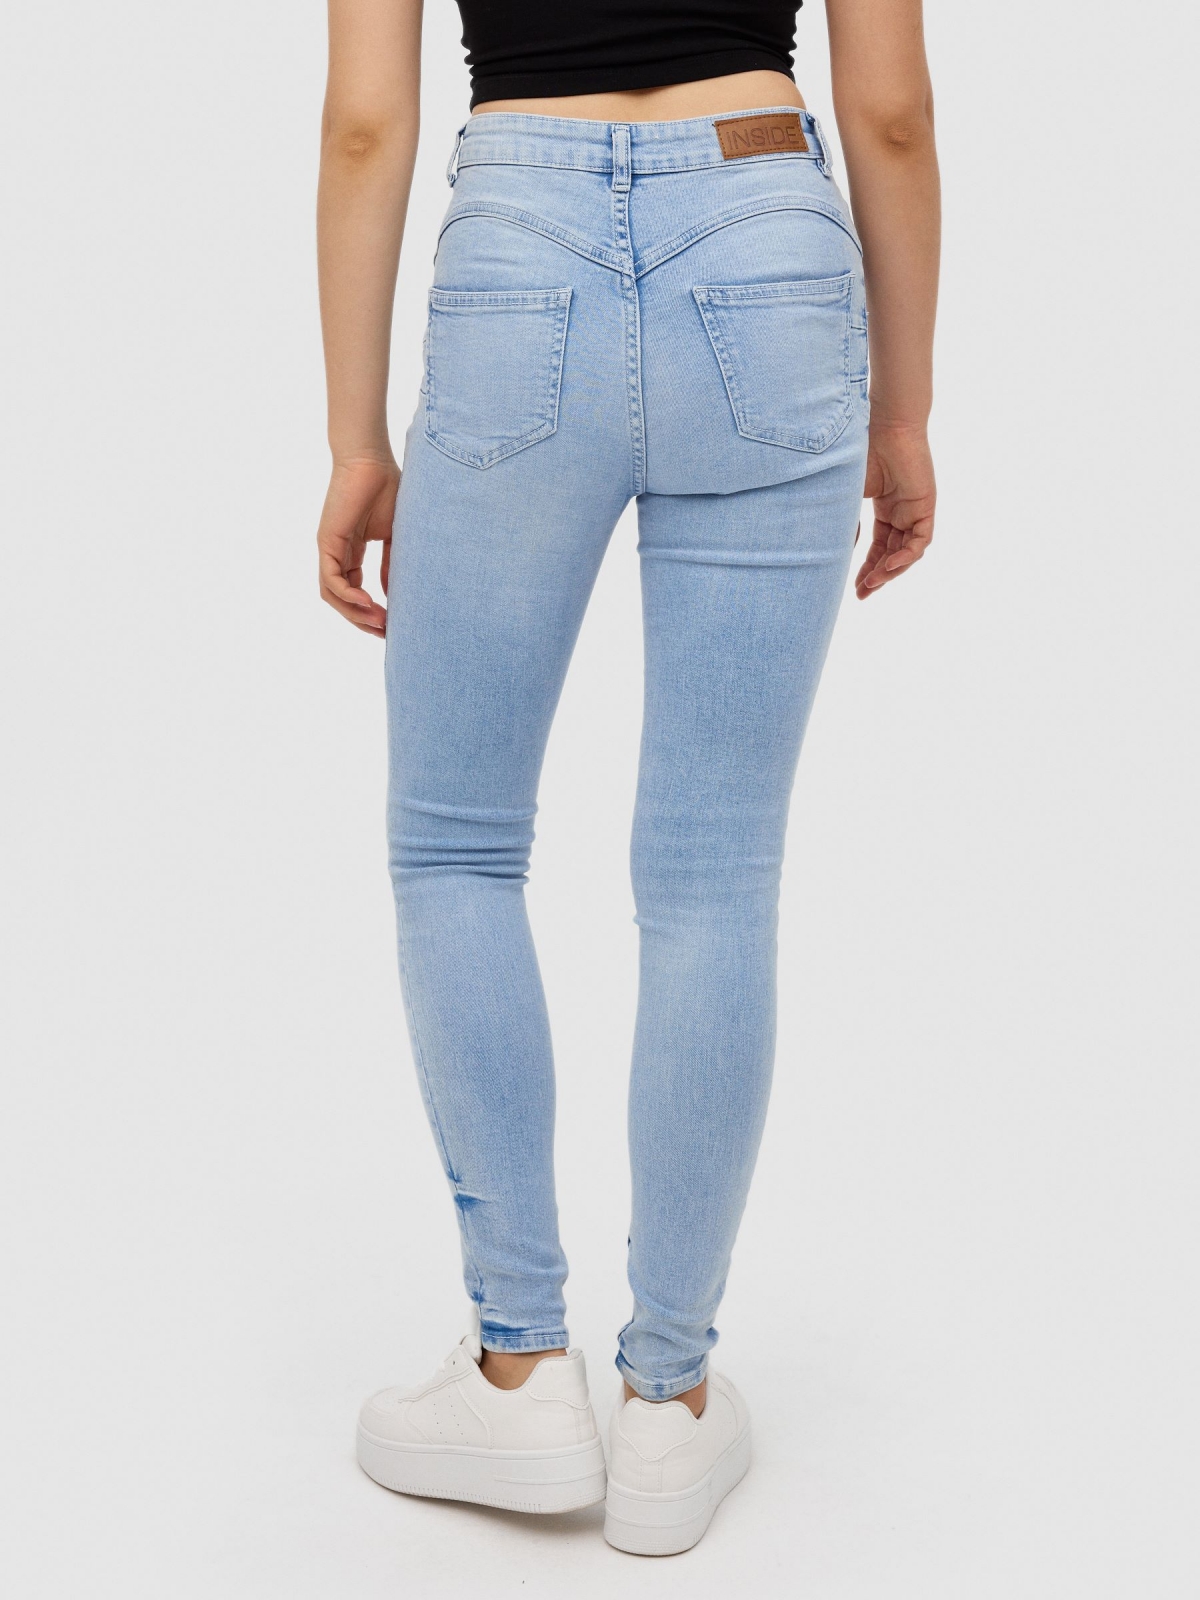 Jeans skinny denim tiro alto azul vista media trasera